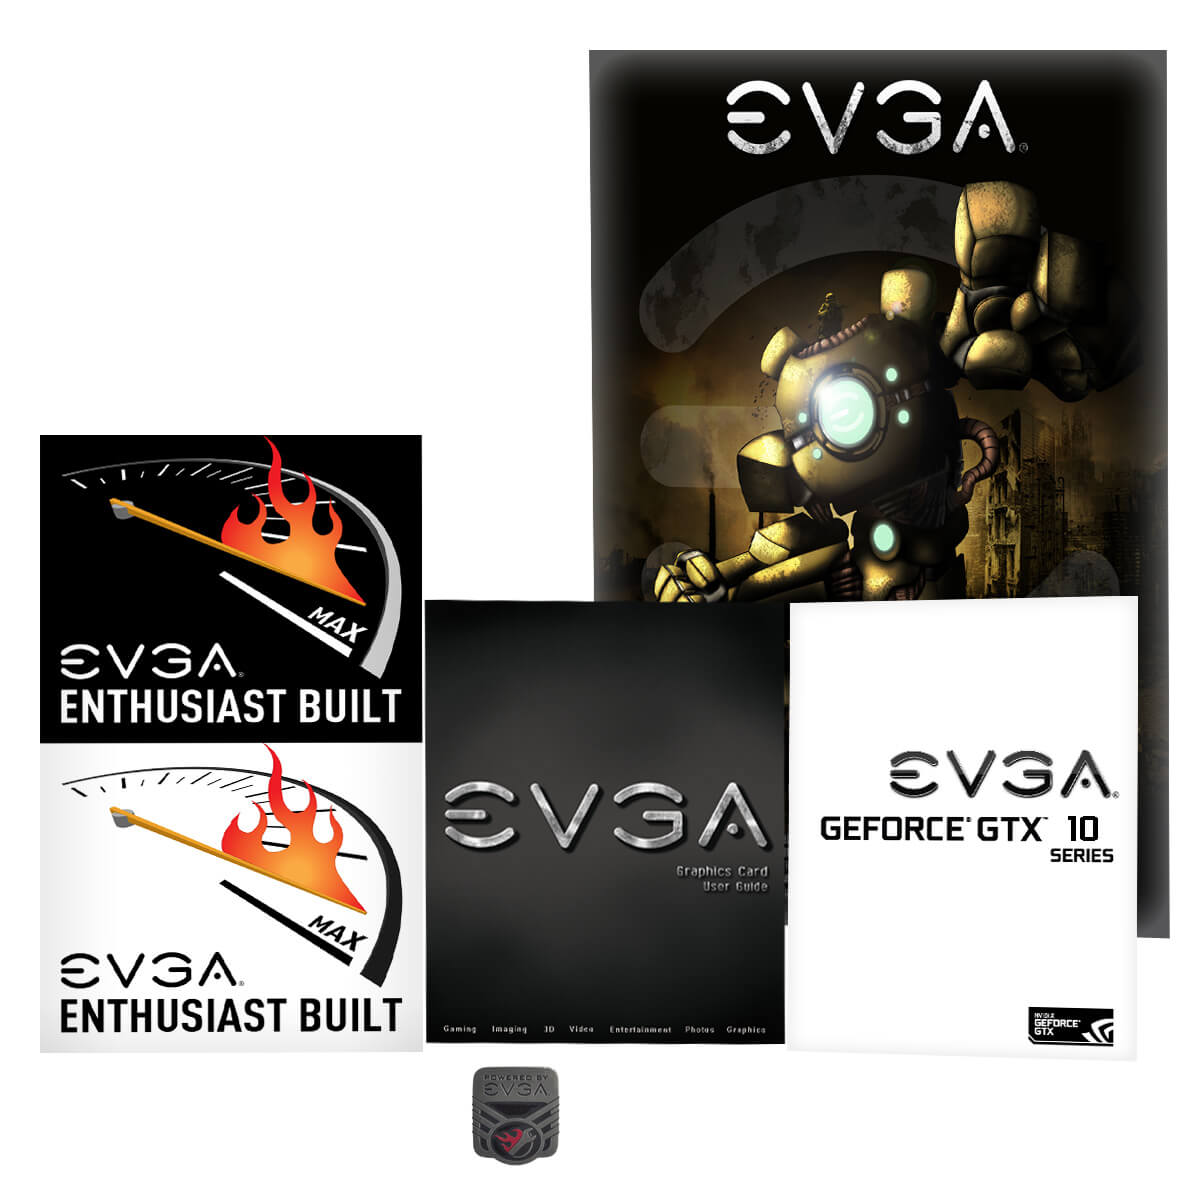 EVGA - JP - 製品 - EVGA GeForce GTX 